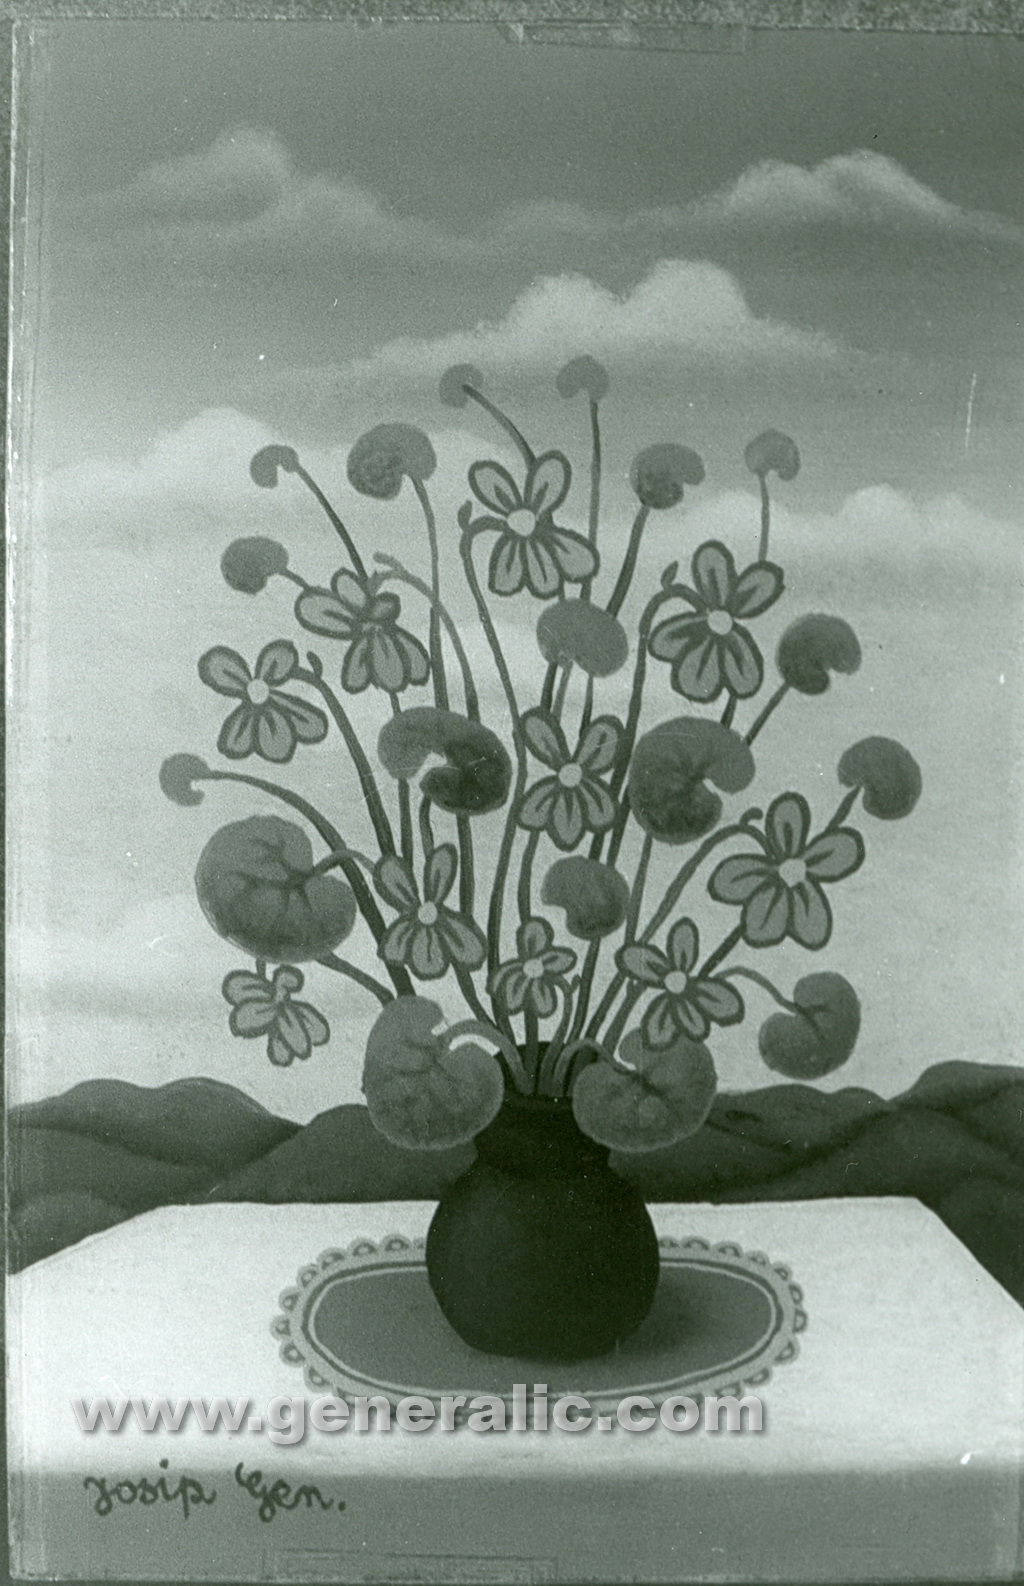 Josip Generalic, 1980, Flowers on white table, oil on glass